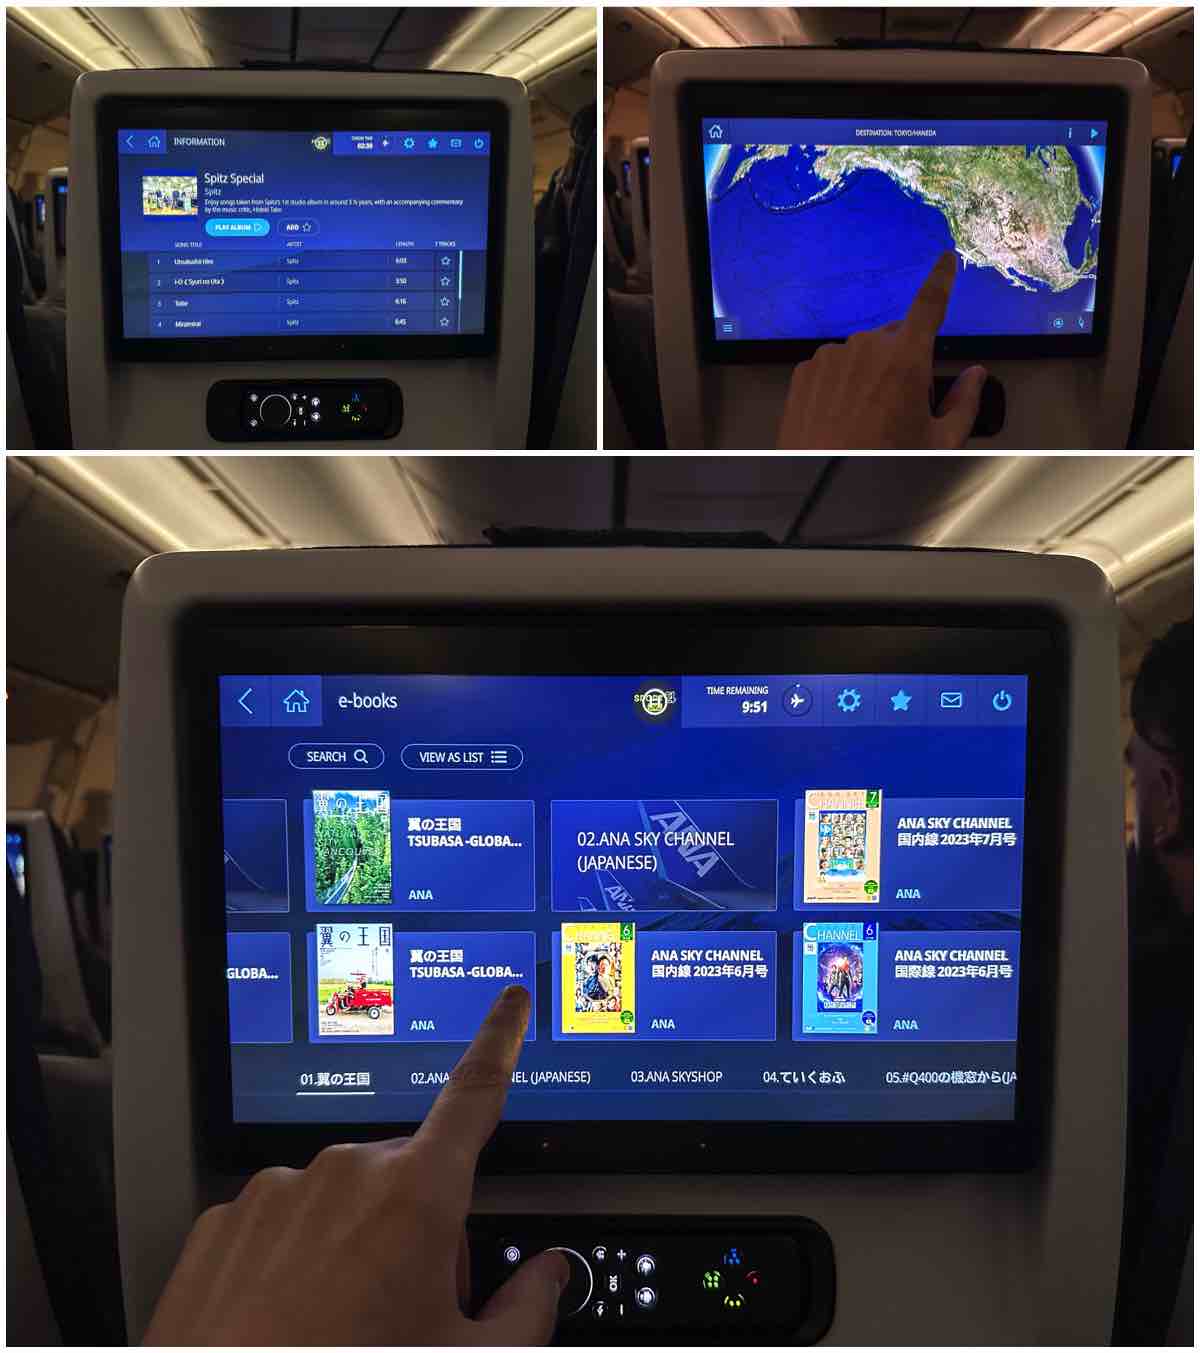 ANA 777-300ER economy video entertainment system audio, e-books, and map